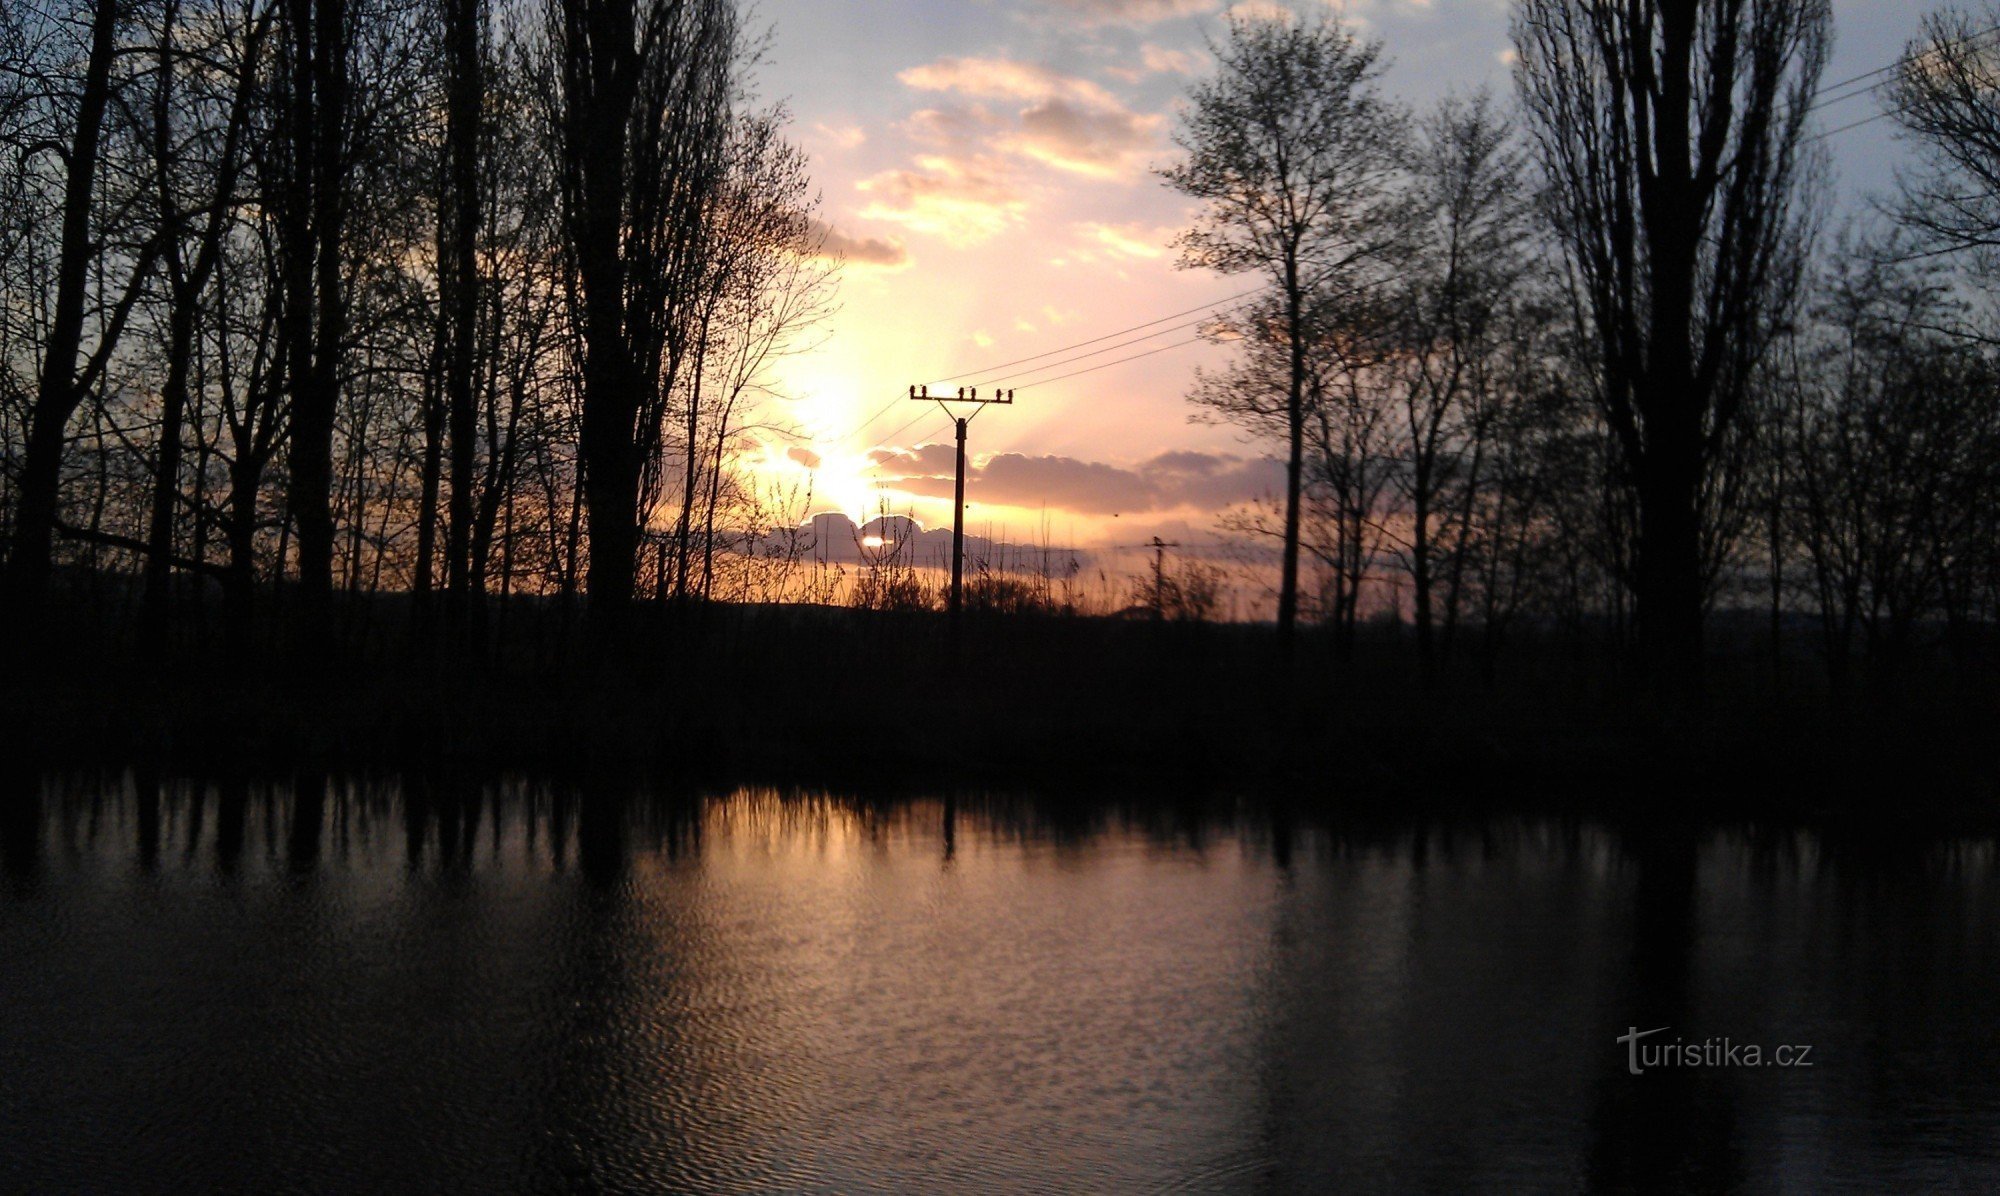 Holásecké jezero ob sončnem zahodu (fotografirano z mobilnim telefonom)